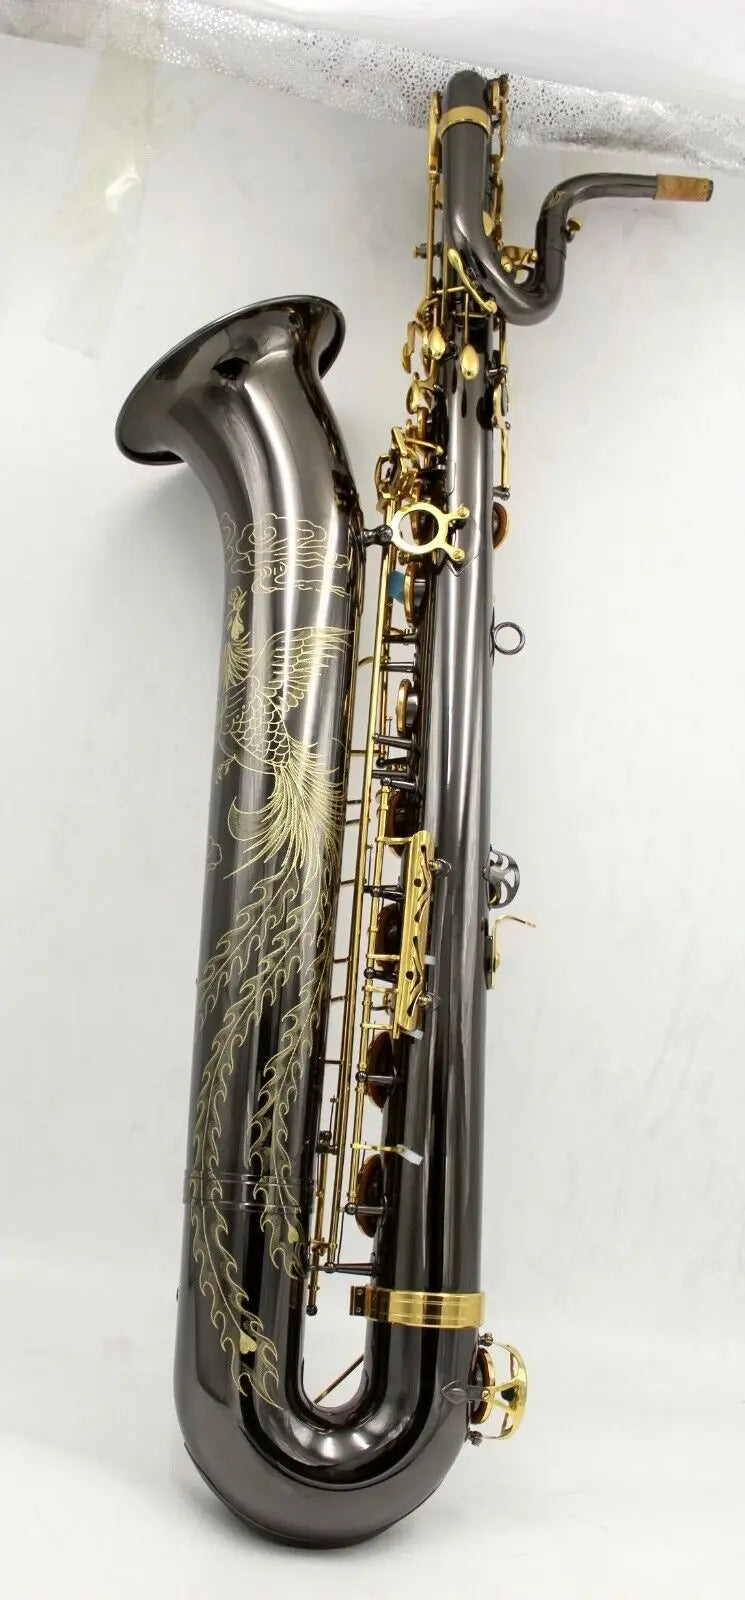 EM music black nickel body gold key Baritone Saxophone with phoenix engraving